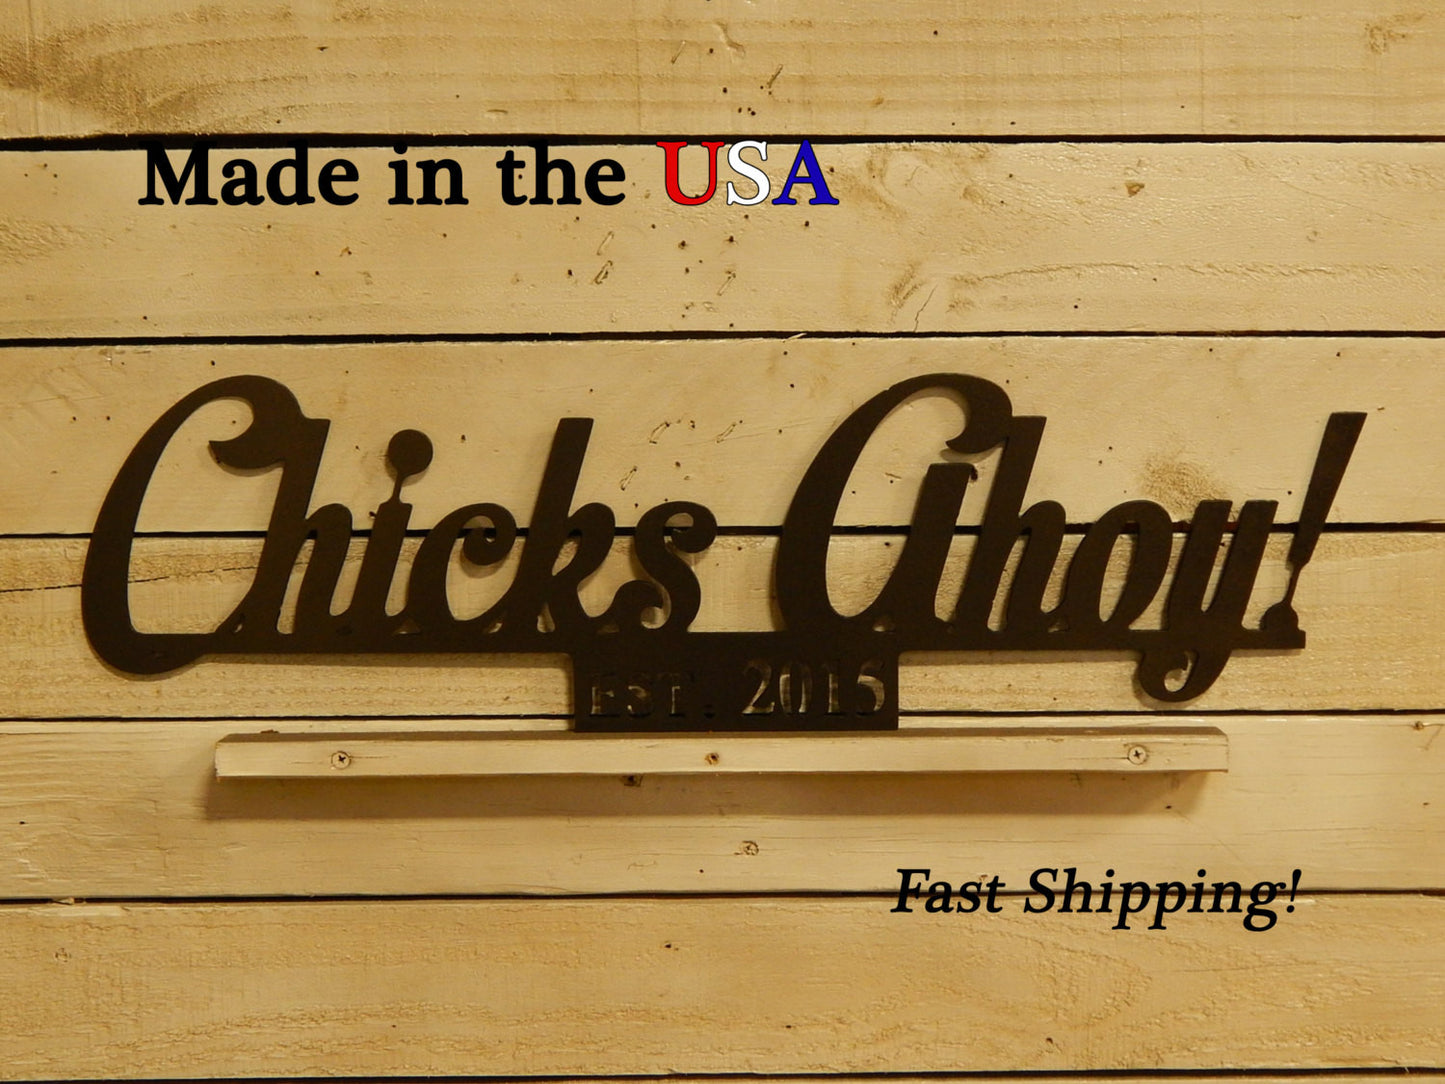 Chicks Ahoy!